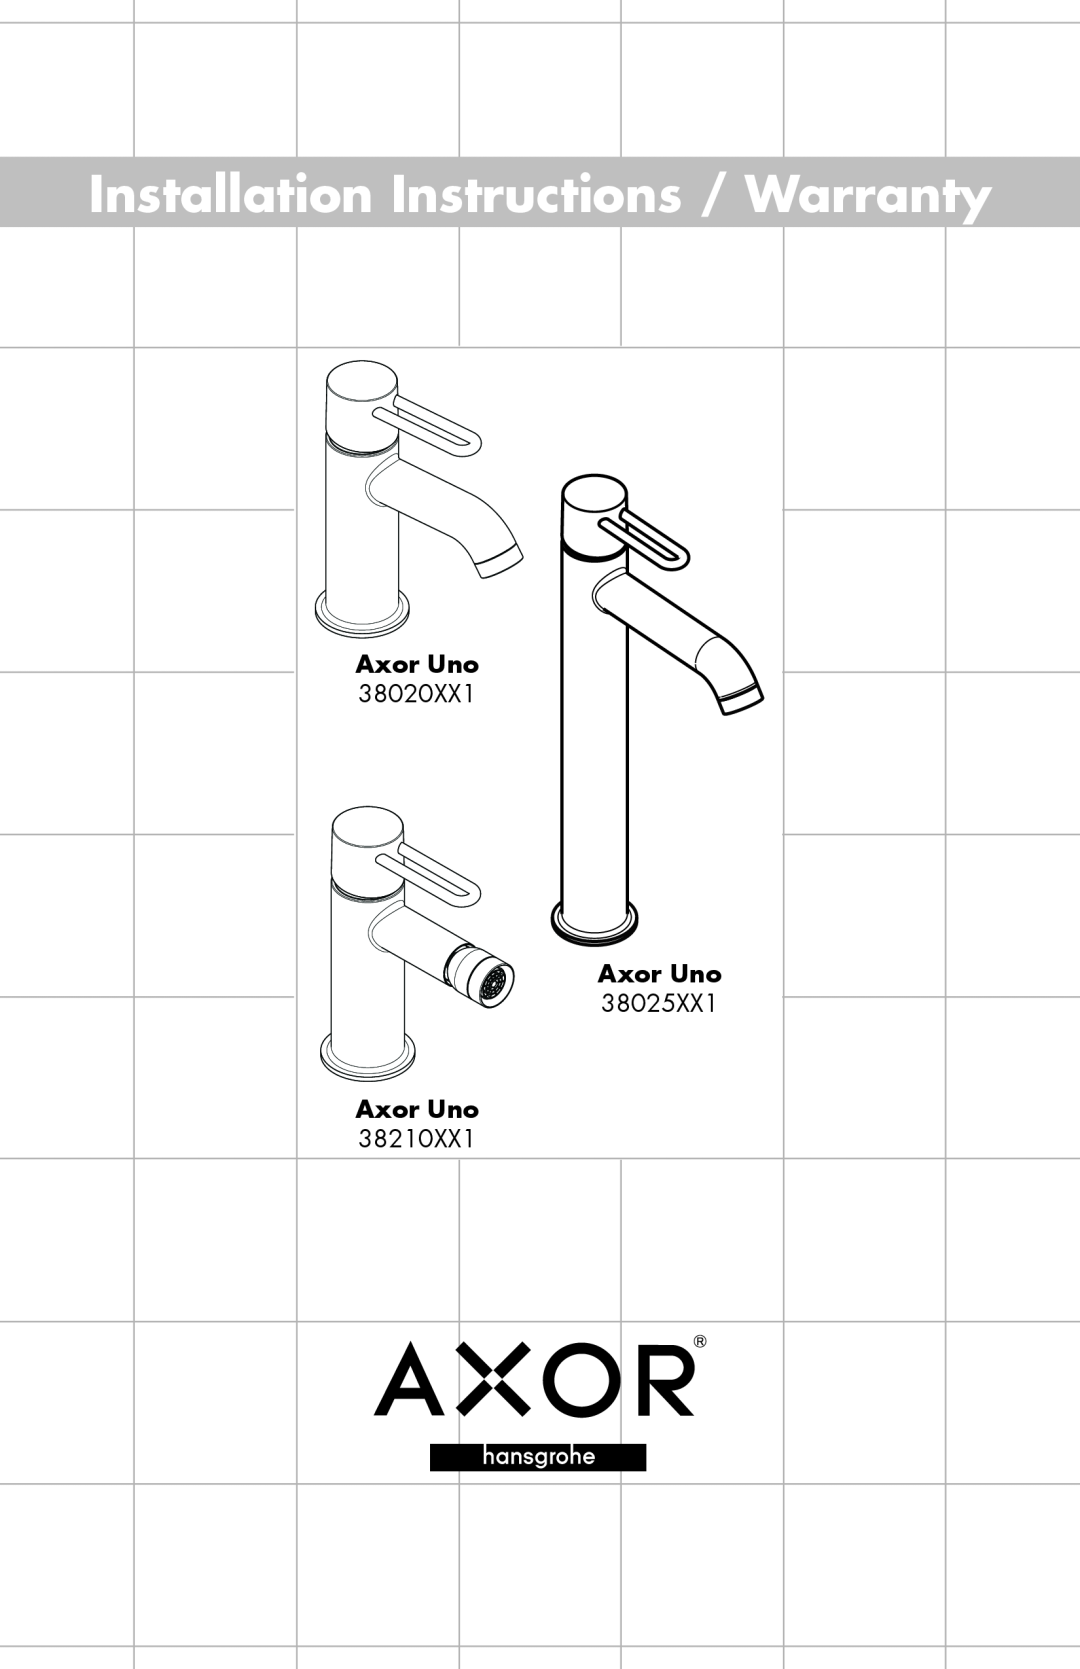 Axor 38210XX1, 3802XX1, 38025XX1 installation instructions Axor Uno, Installation Instructions / Warranty 